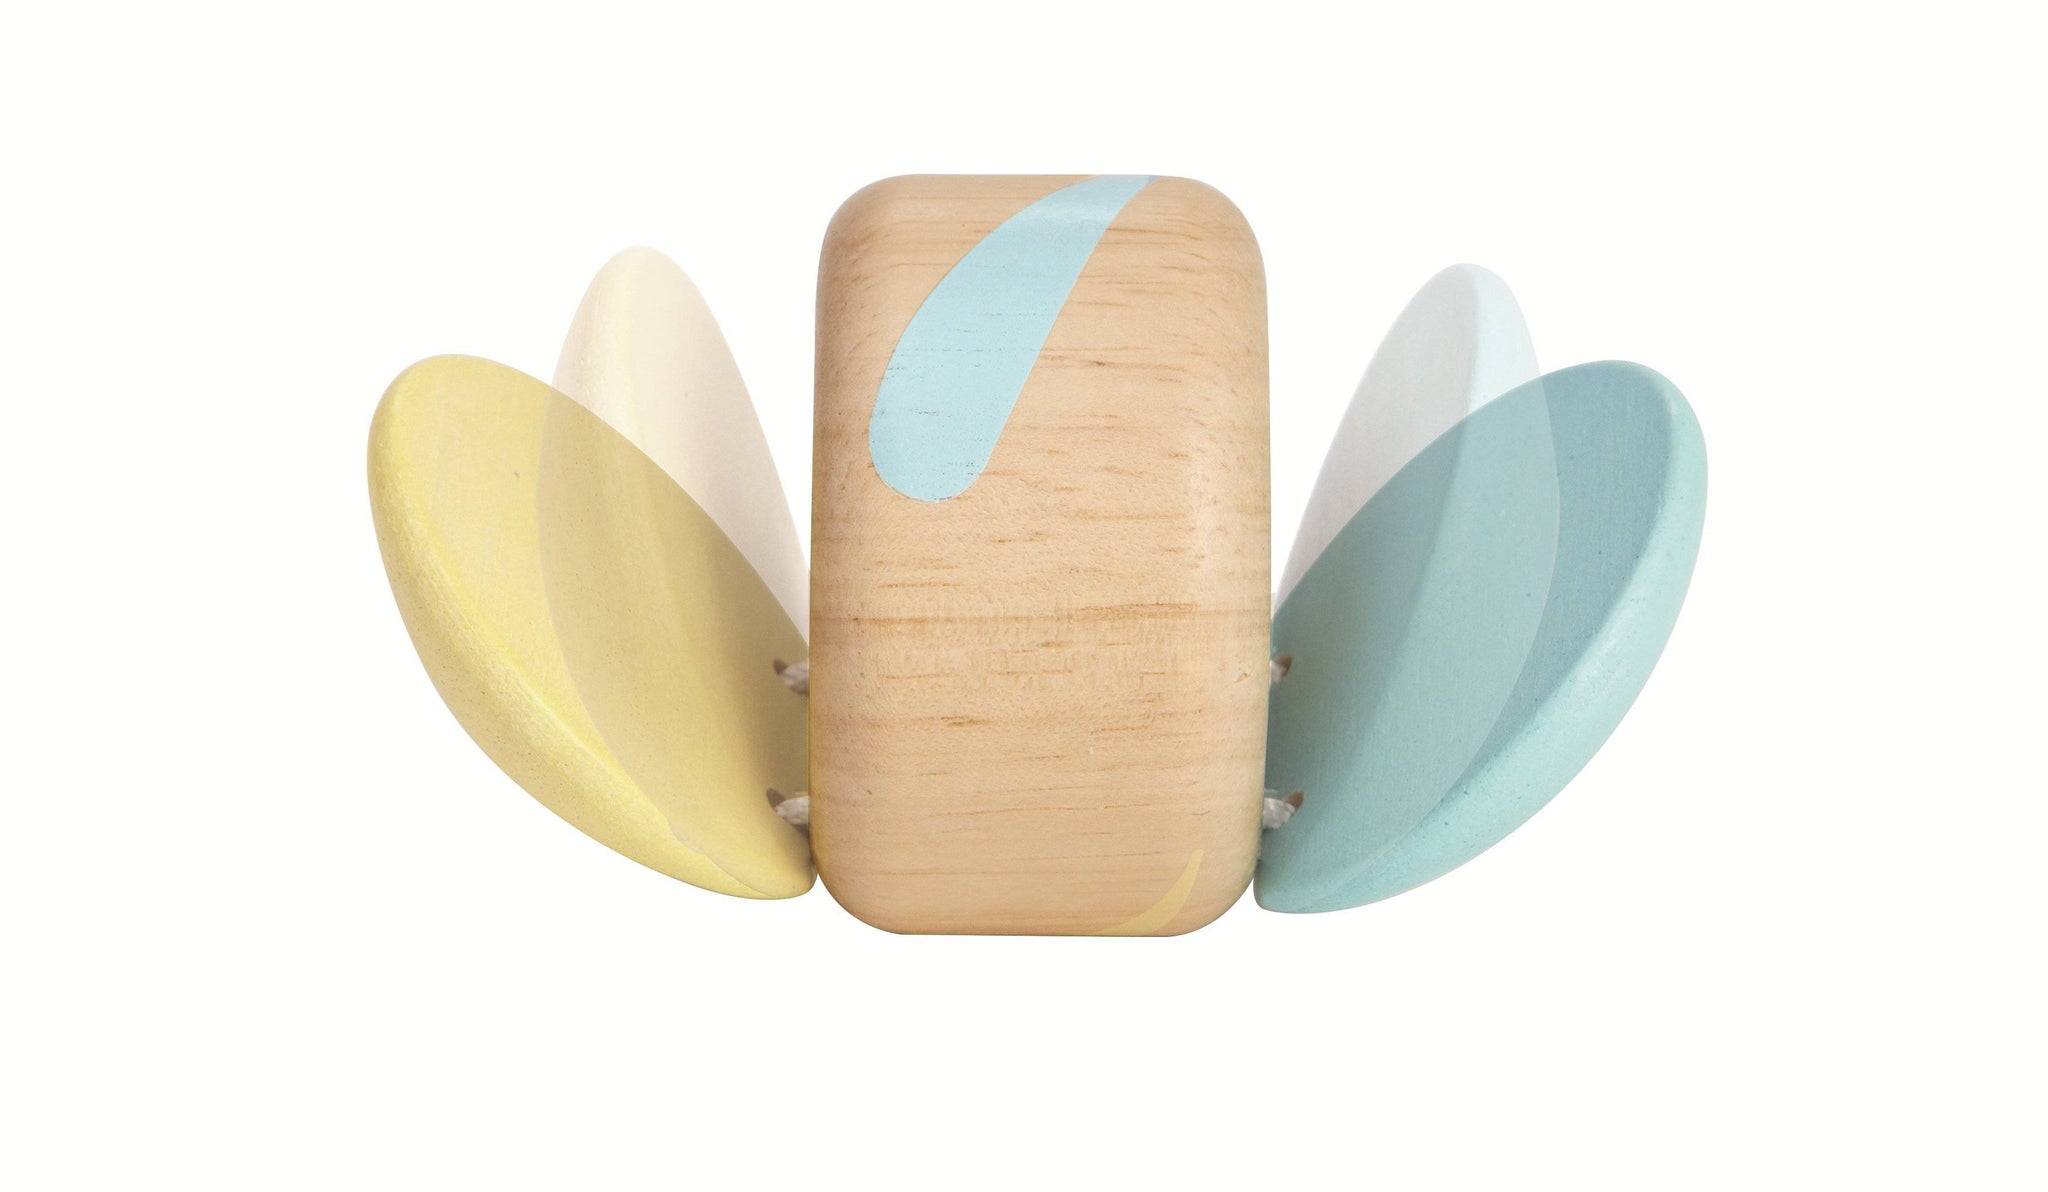 Klapperwalze Naturholz pastell ab 4 Monate - KleinKinderKram Baby Online Shop